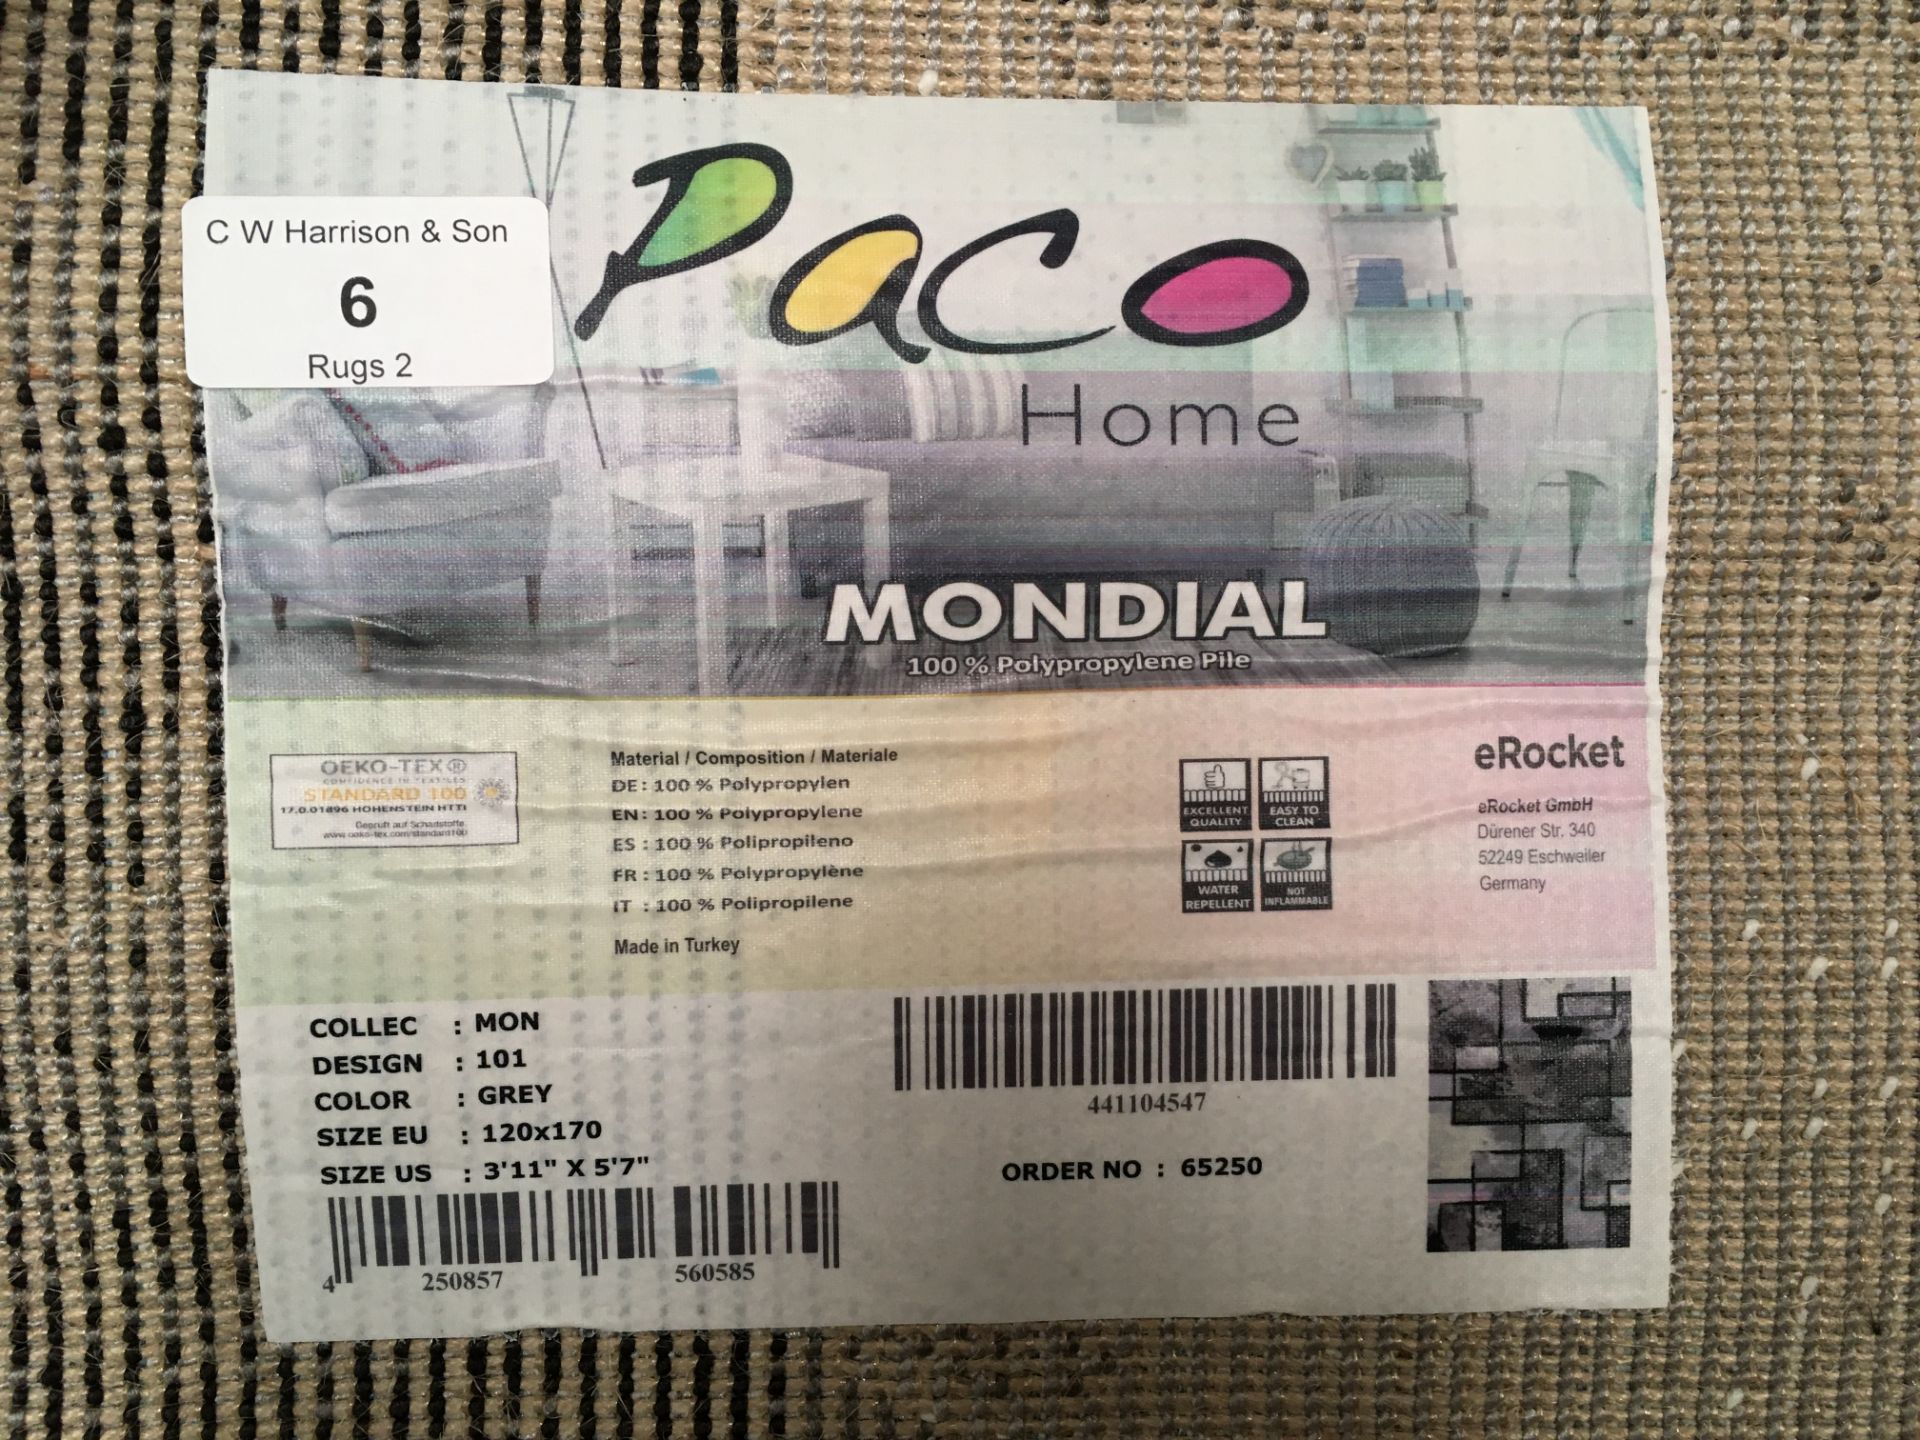 A Paco Home Mondial 101 grey rug - 120cm x 170cm - Image 2 of 2